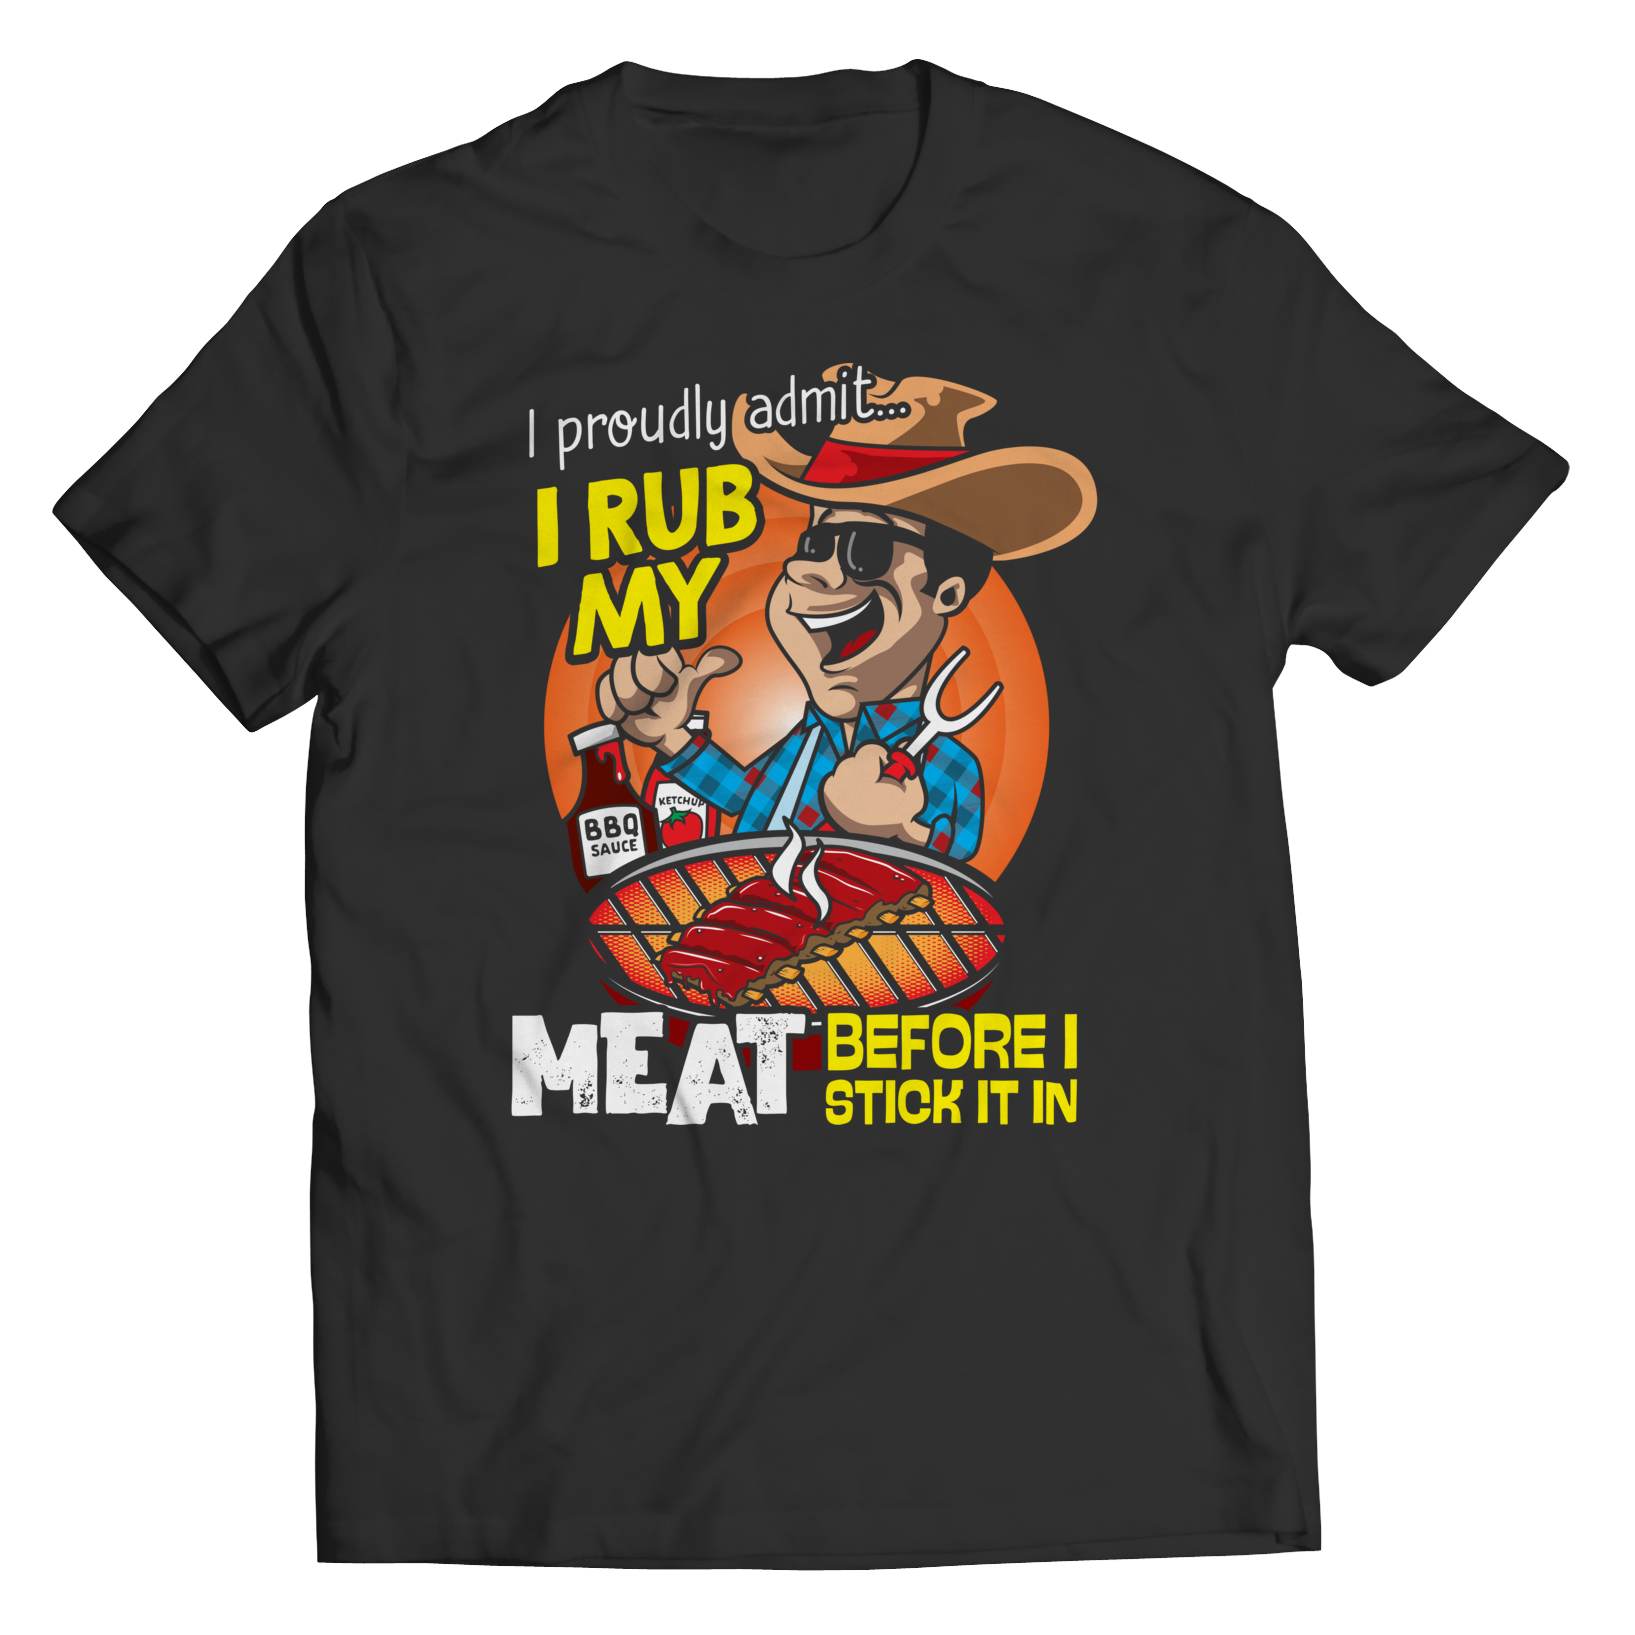 I rub my meat